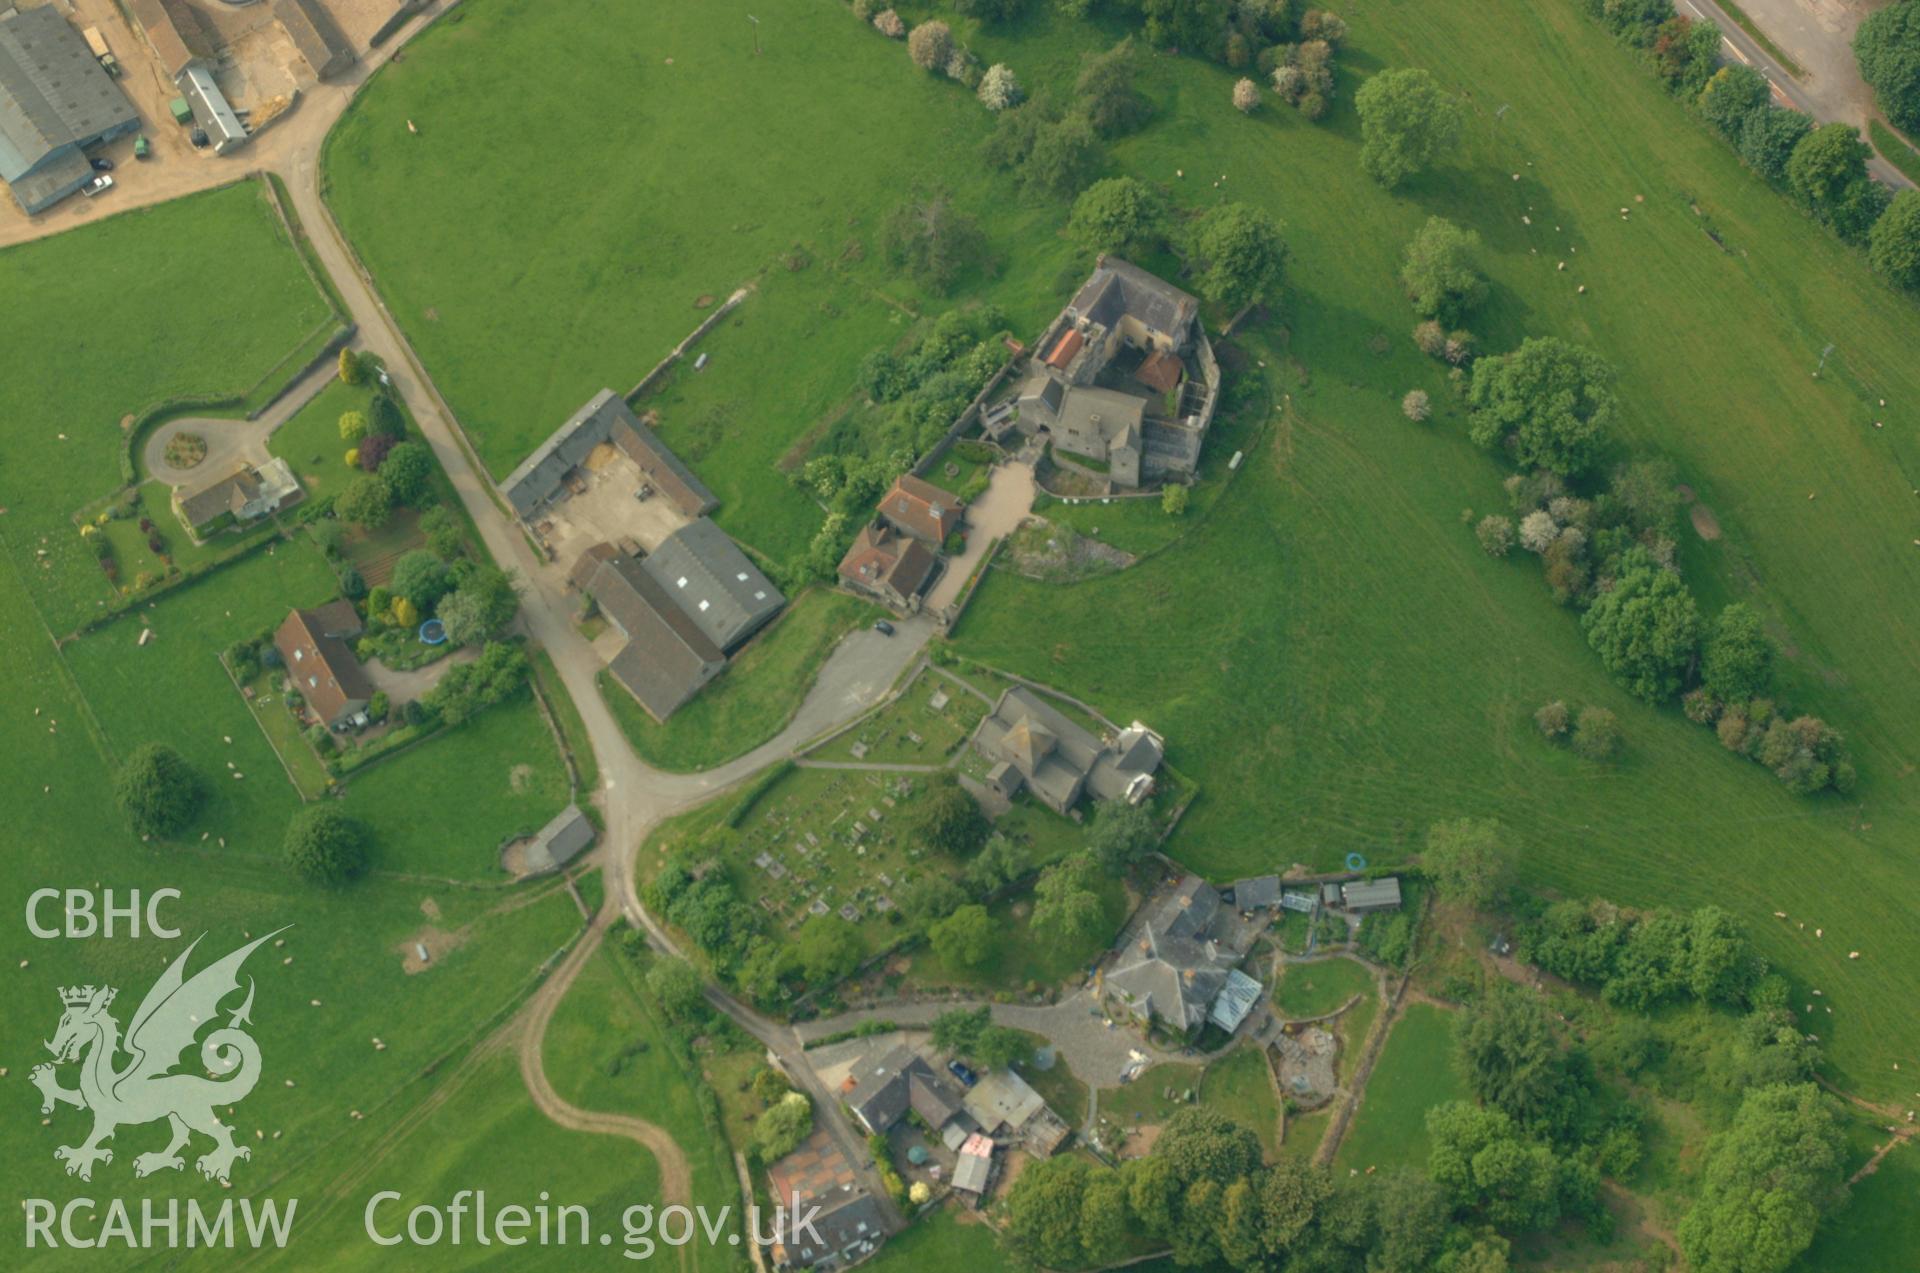 RCAHMW colour oblique aerial photograph of Penhow Castle taken on 26/05/2004 by Toby Driver